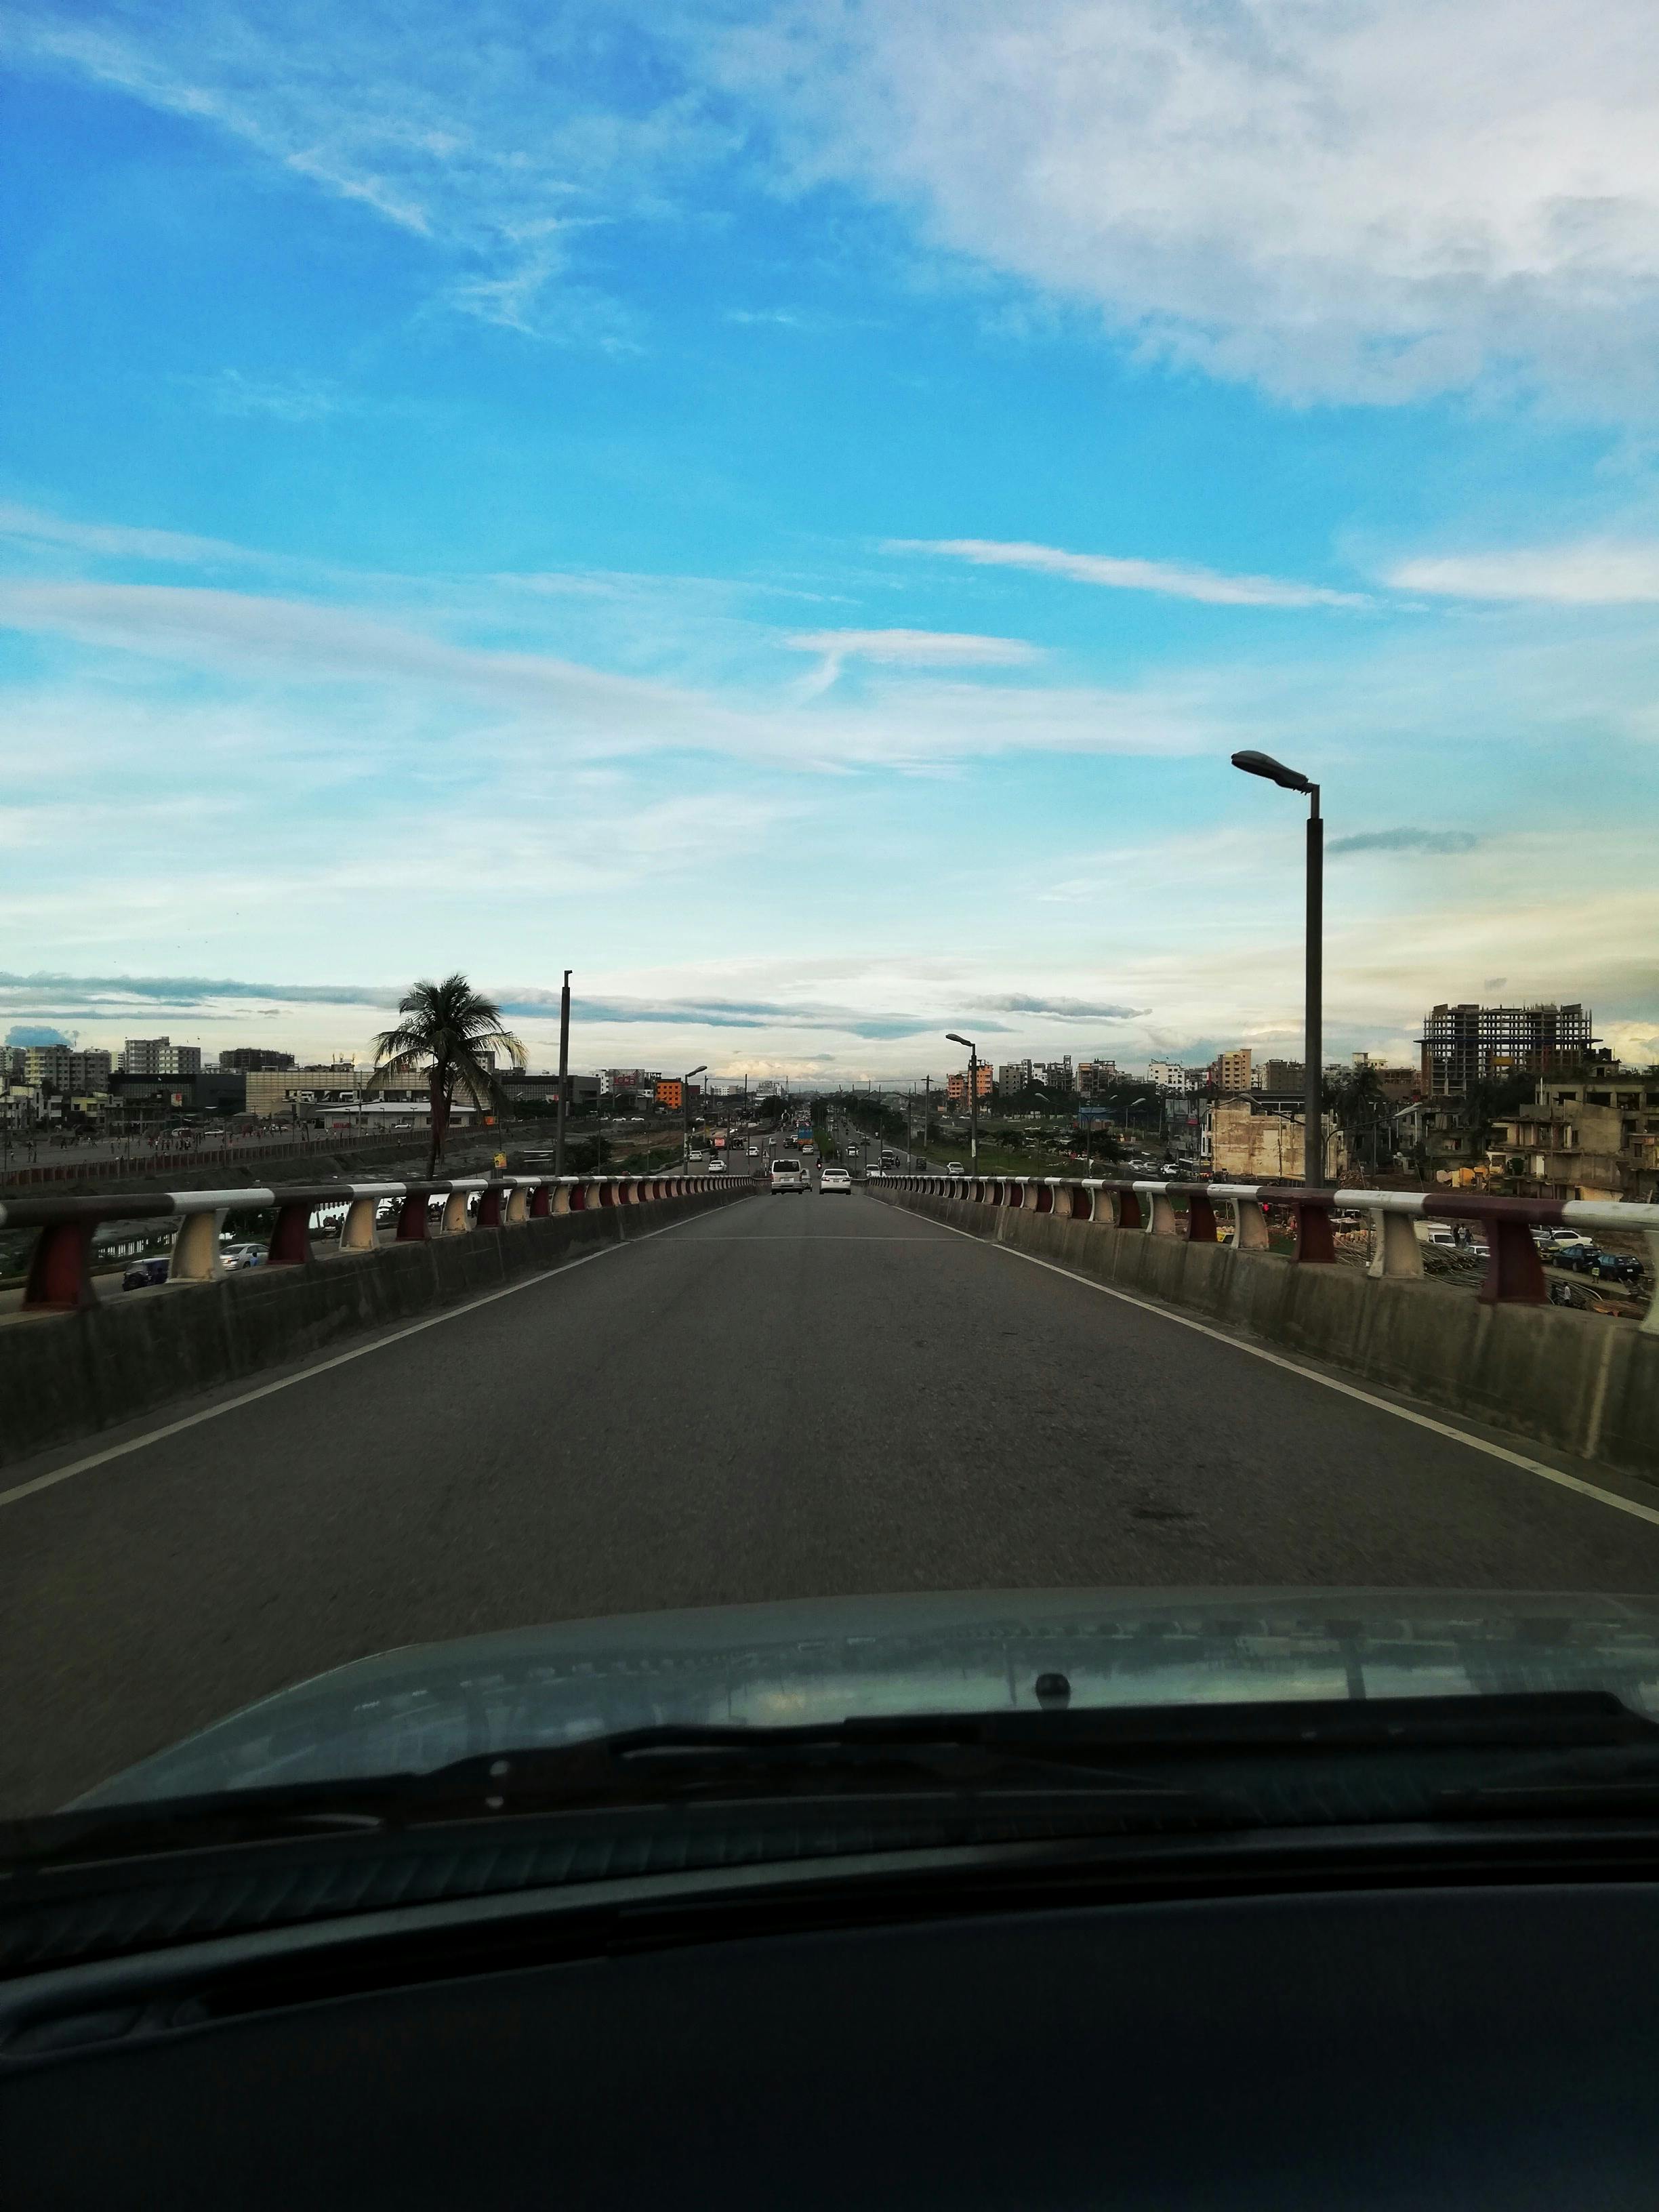 Free stock photo of blue sky, bridge view, car view